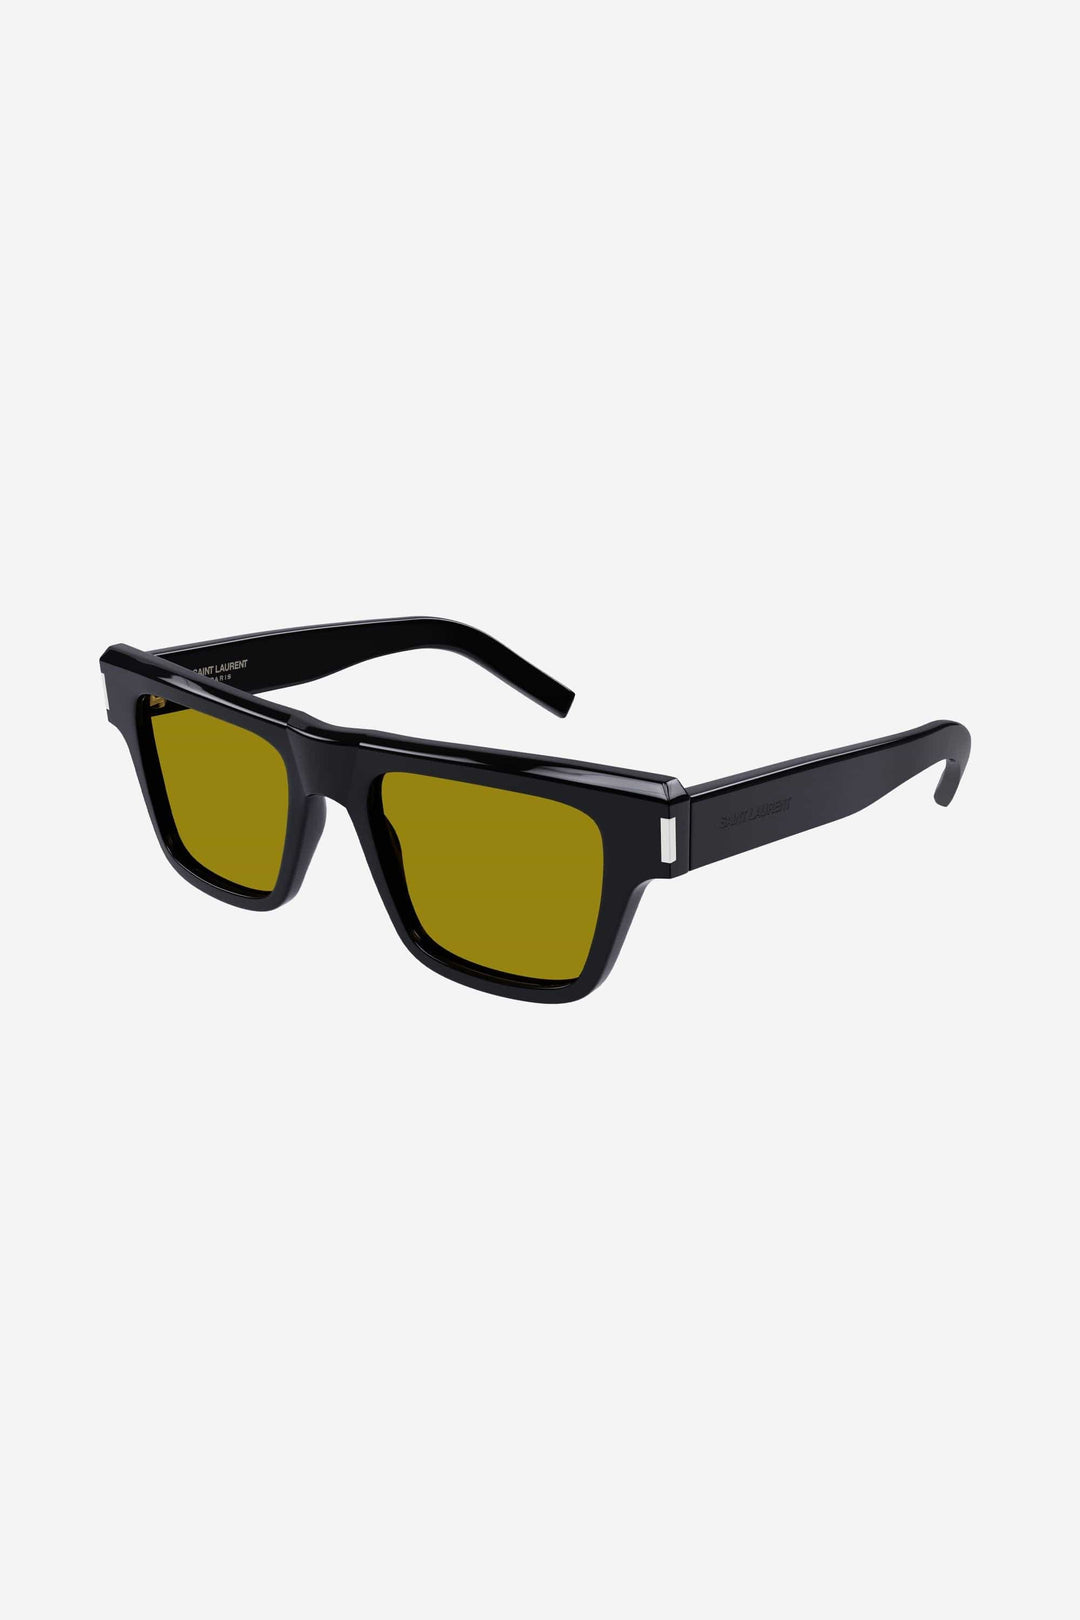 Saint Laurent squared black angular sunglasses with yellow lenses - Eyewear Club